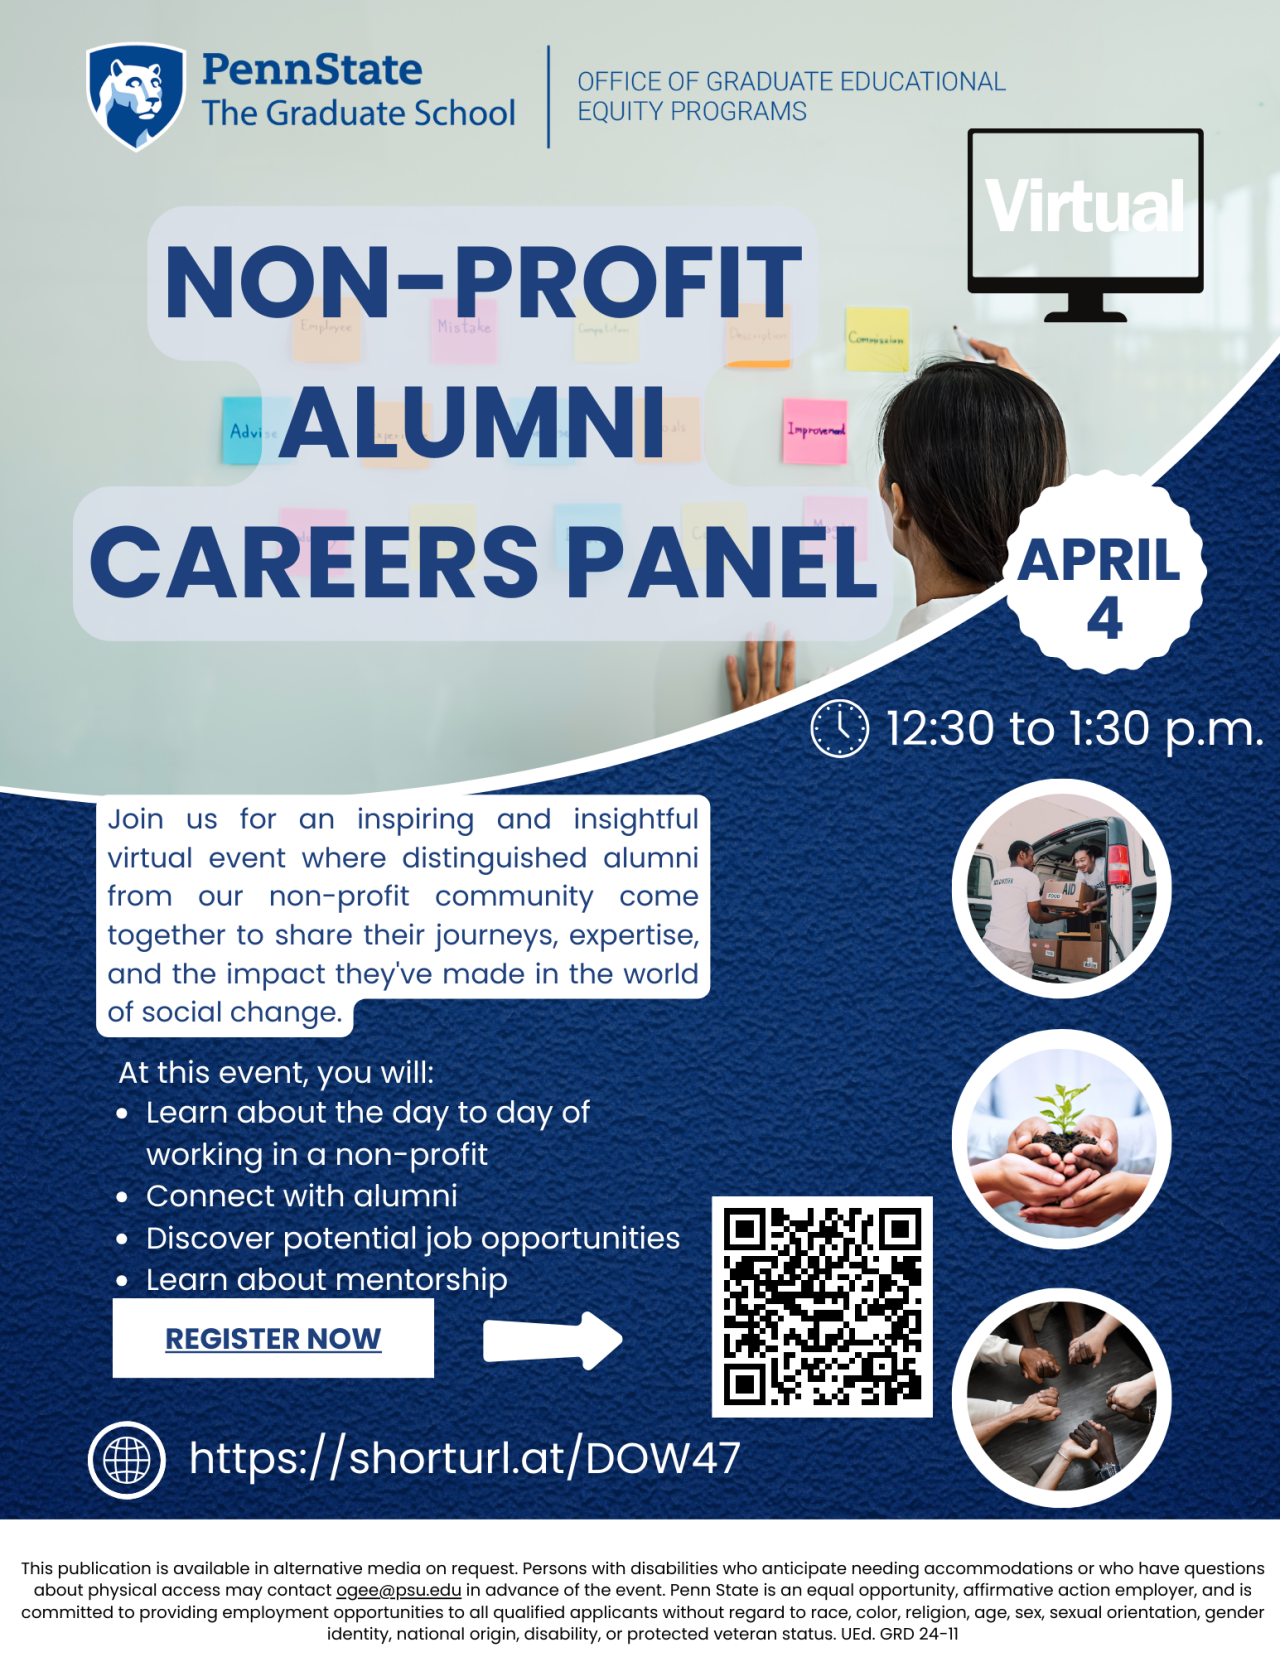 Non-Profit Careers Panel Flyer